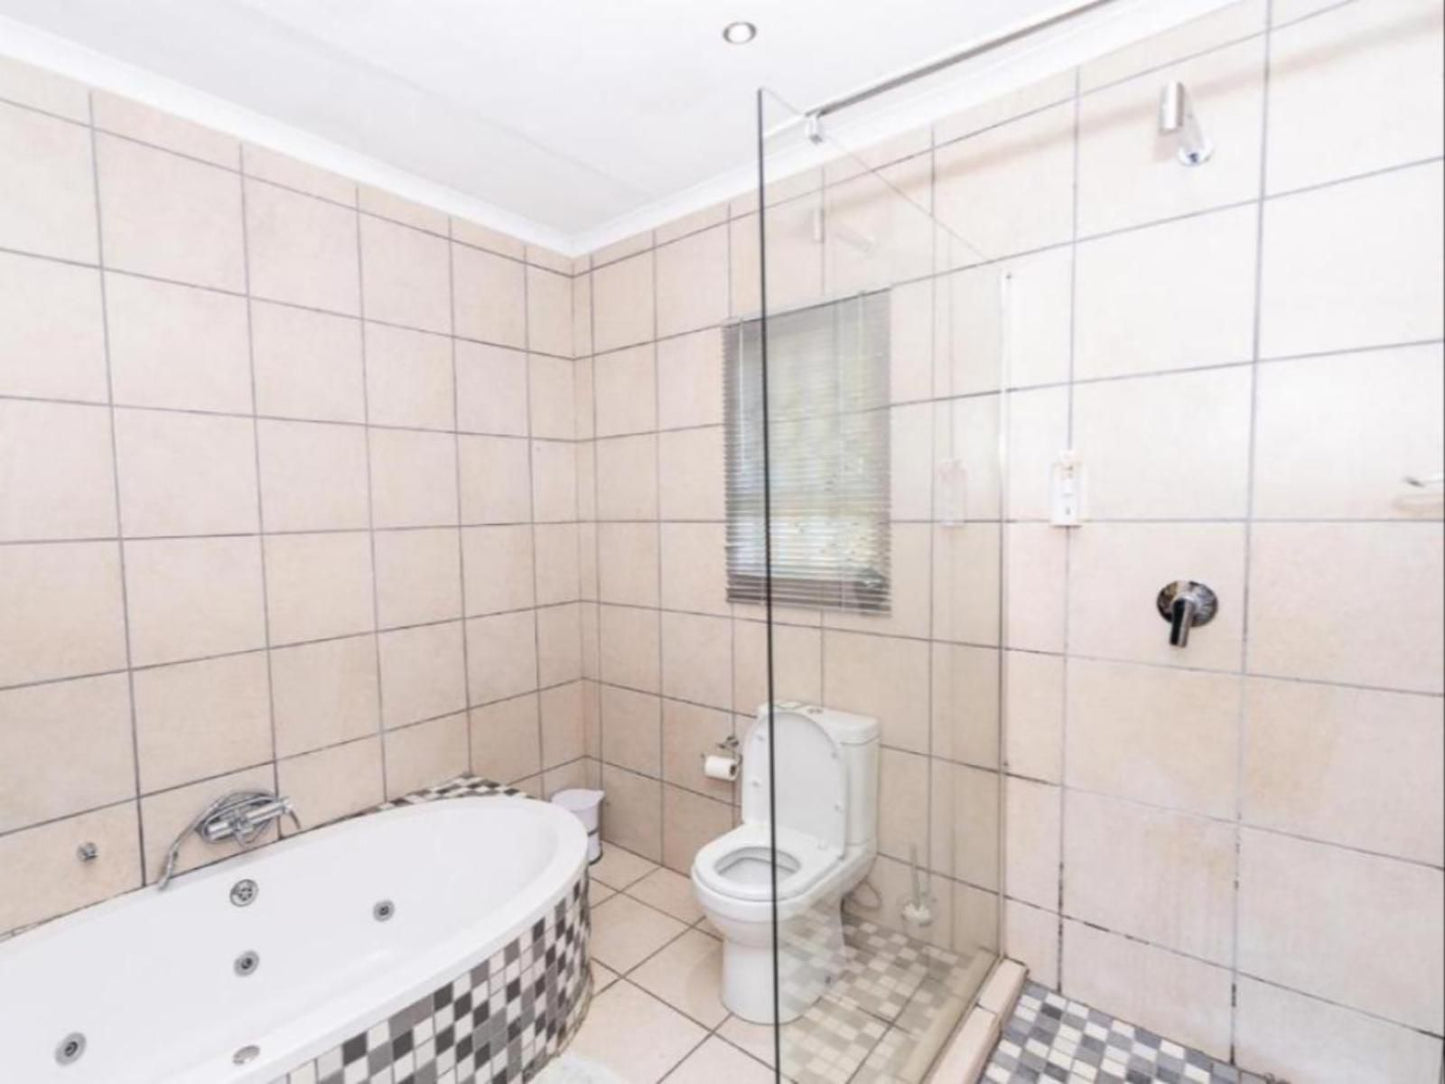 Huttenheights Guestlodge By Ilawu Hutten Heights Newcastle Kwazulu Natal South Africa Bright, Bathroom